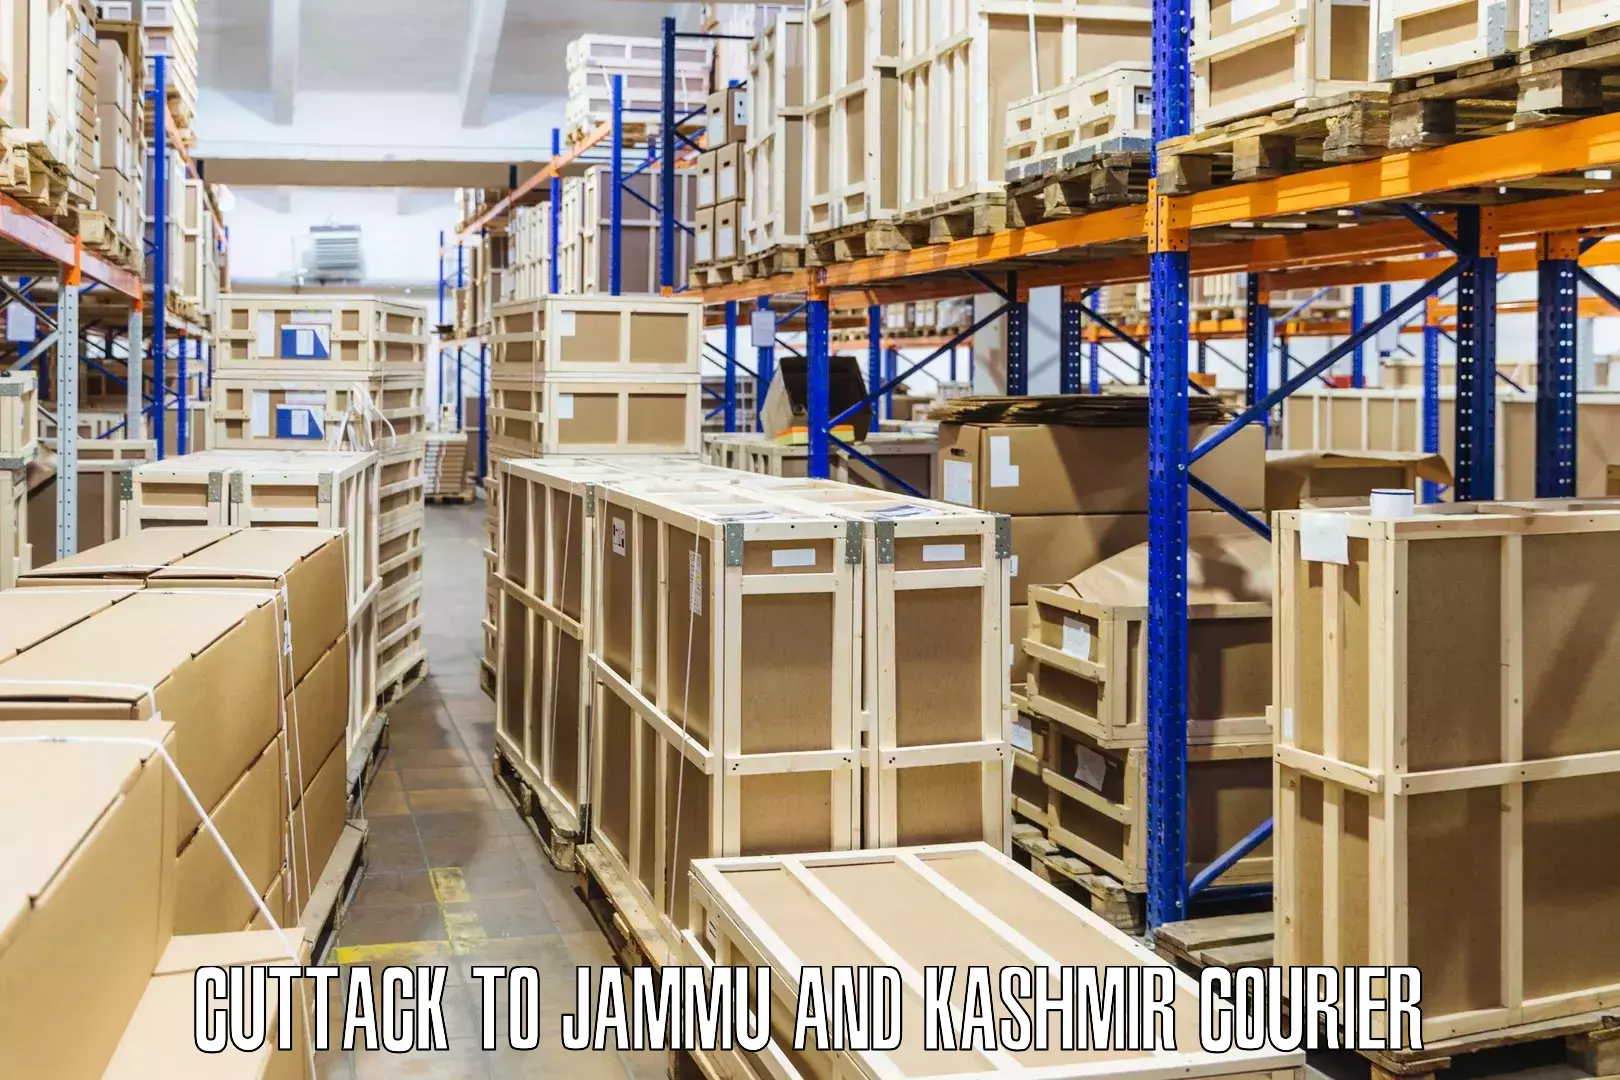 High-performance logistics Cuttack to Jammu and Kashmir